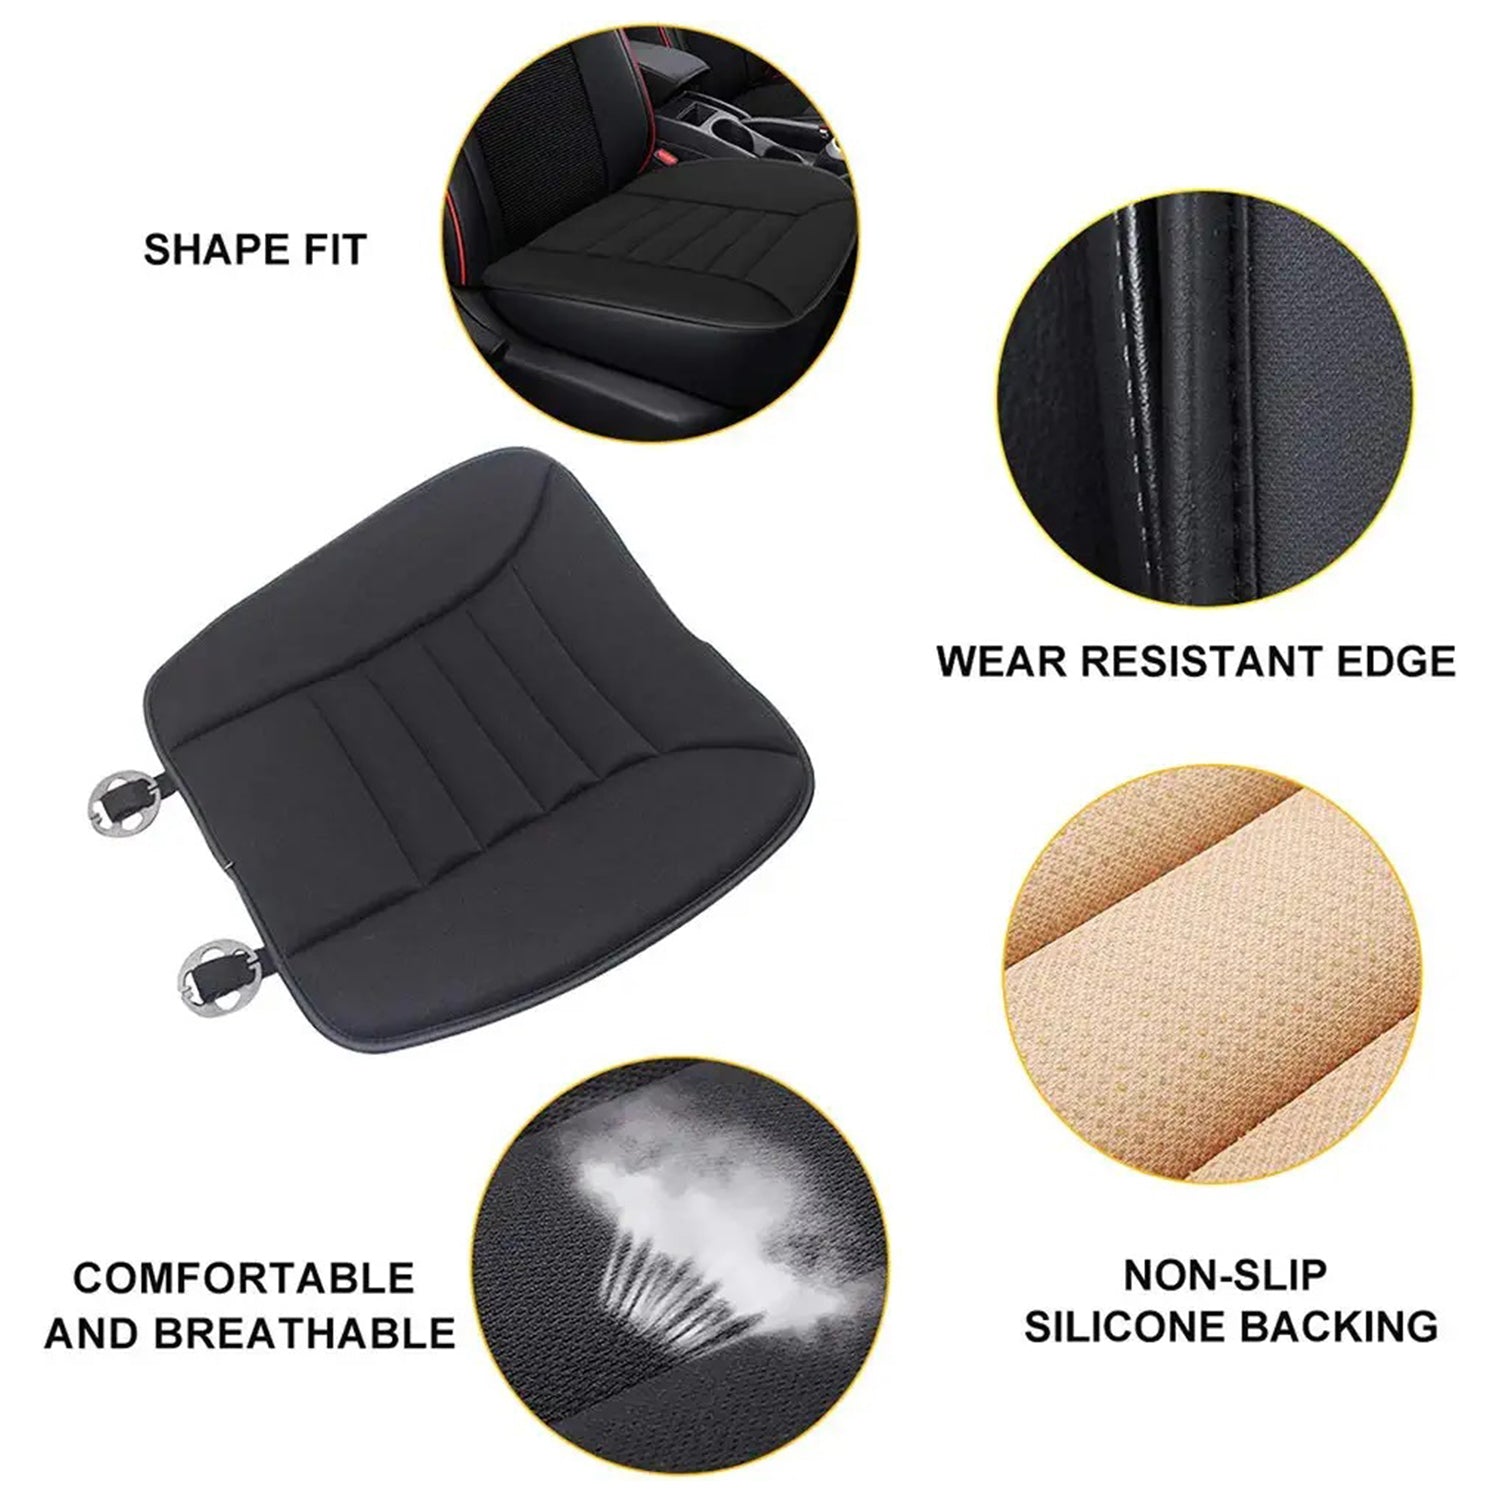 Car Seat Cushion with 1.2inch Comfort Memory Foam, Custom-Fit For Car, Seat Cushion for Car and Office Chair DLPF247